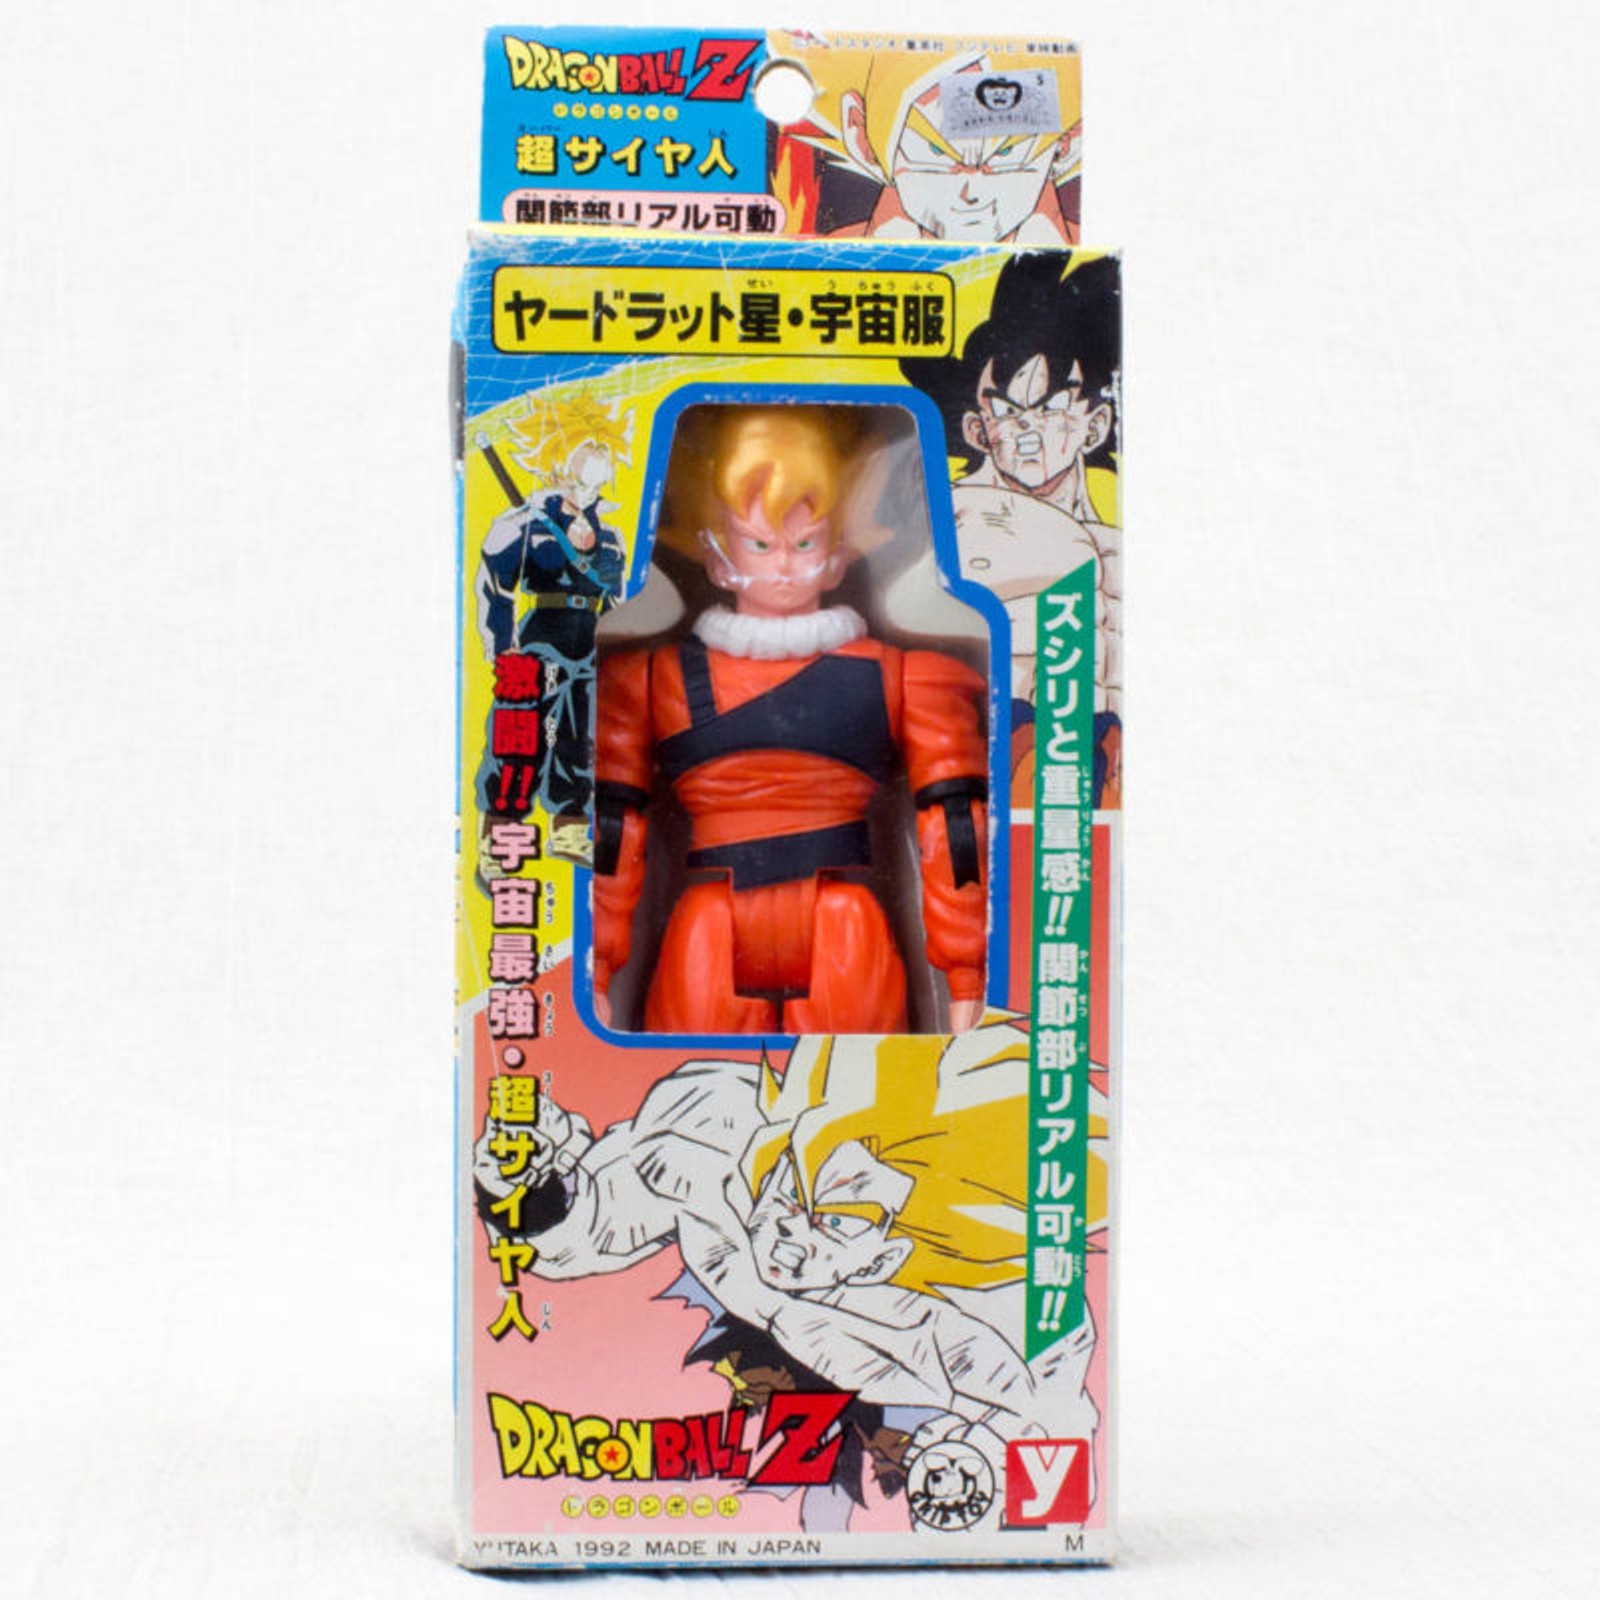 Dragon Ball Z Super Saiyan Son Gokou Yardrat Figure Yutaka JAPAN ANIME MANGA